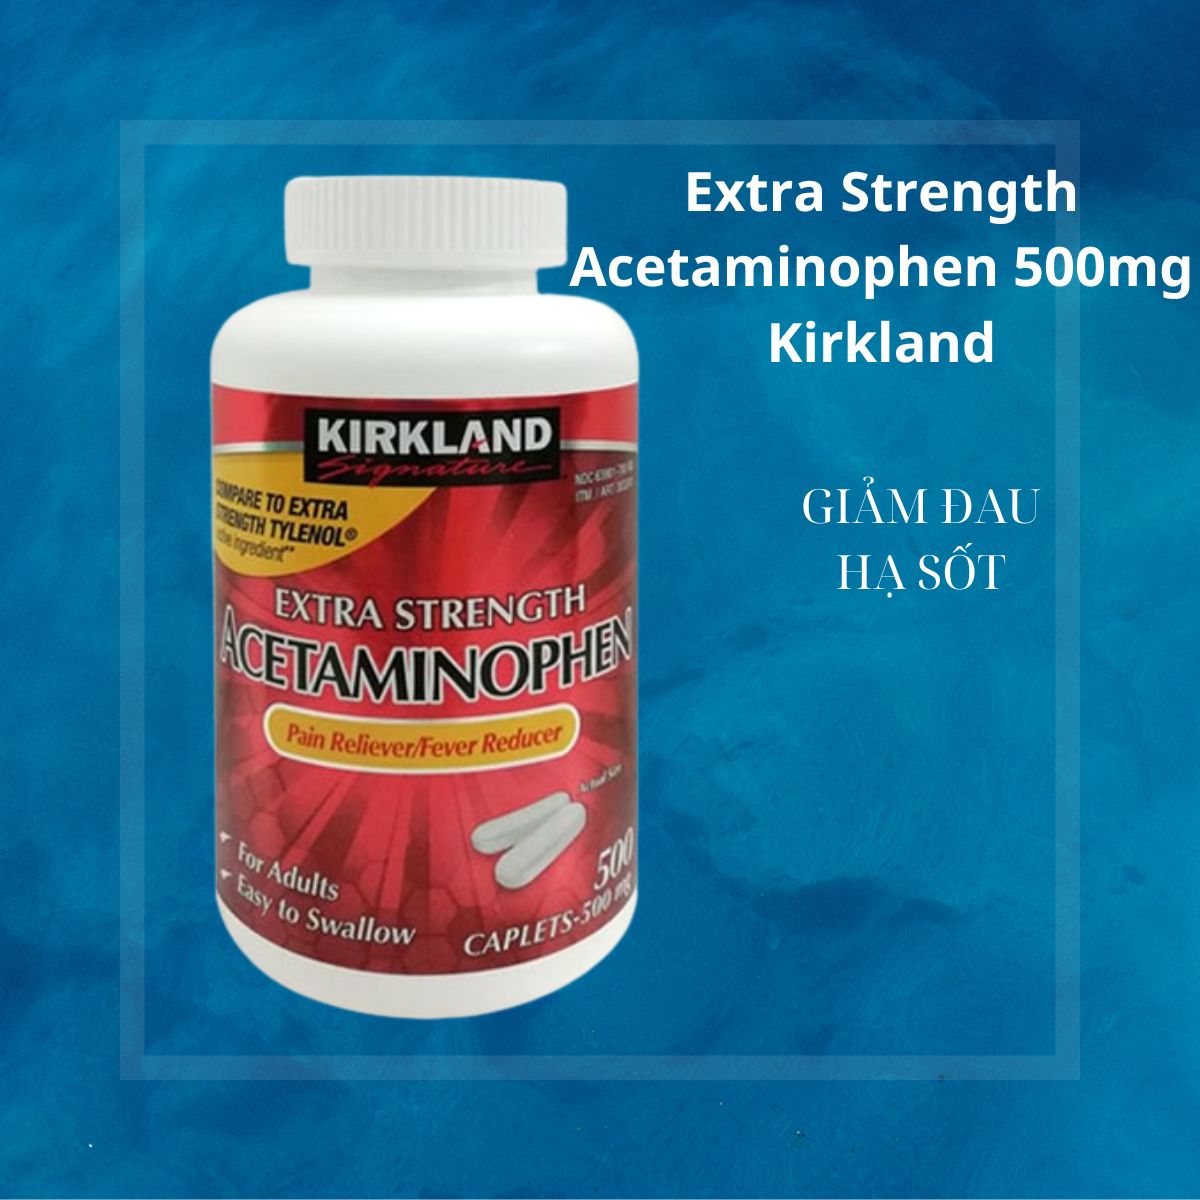 Extra Strength Acetaminophen 500mg Kirkland có tác dụng gì?